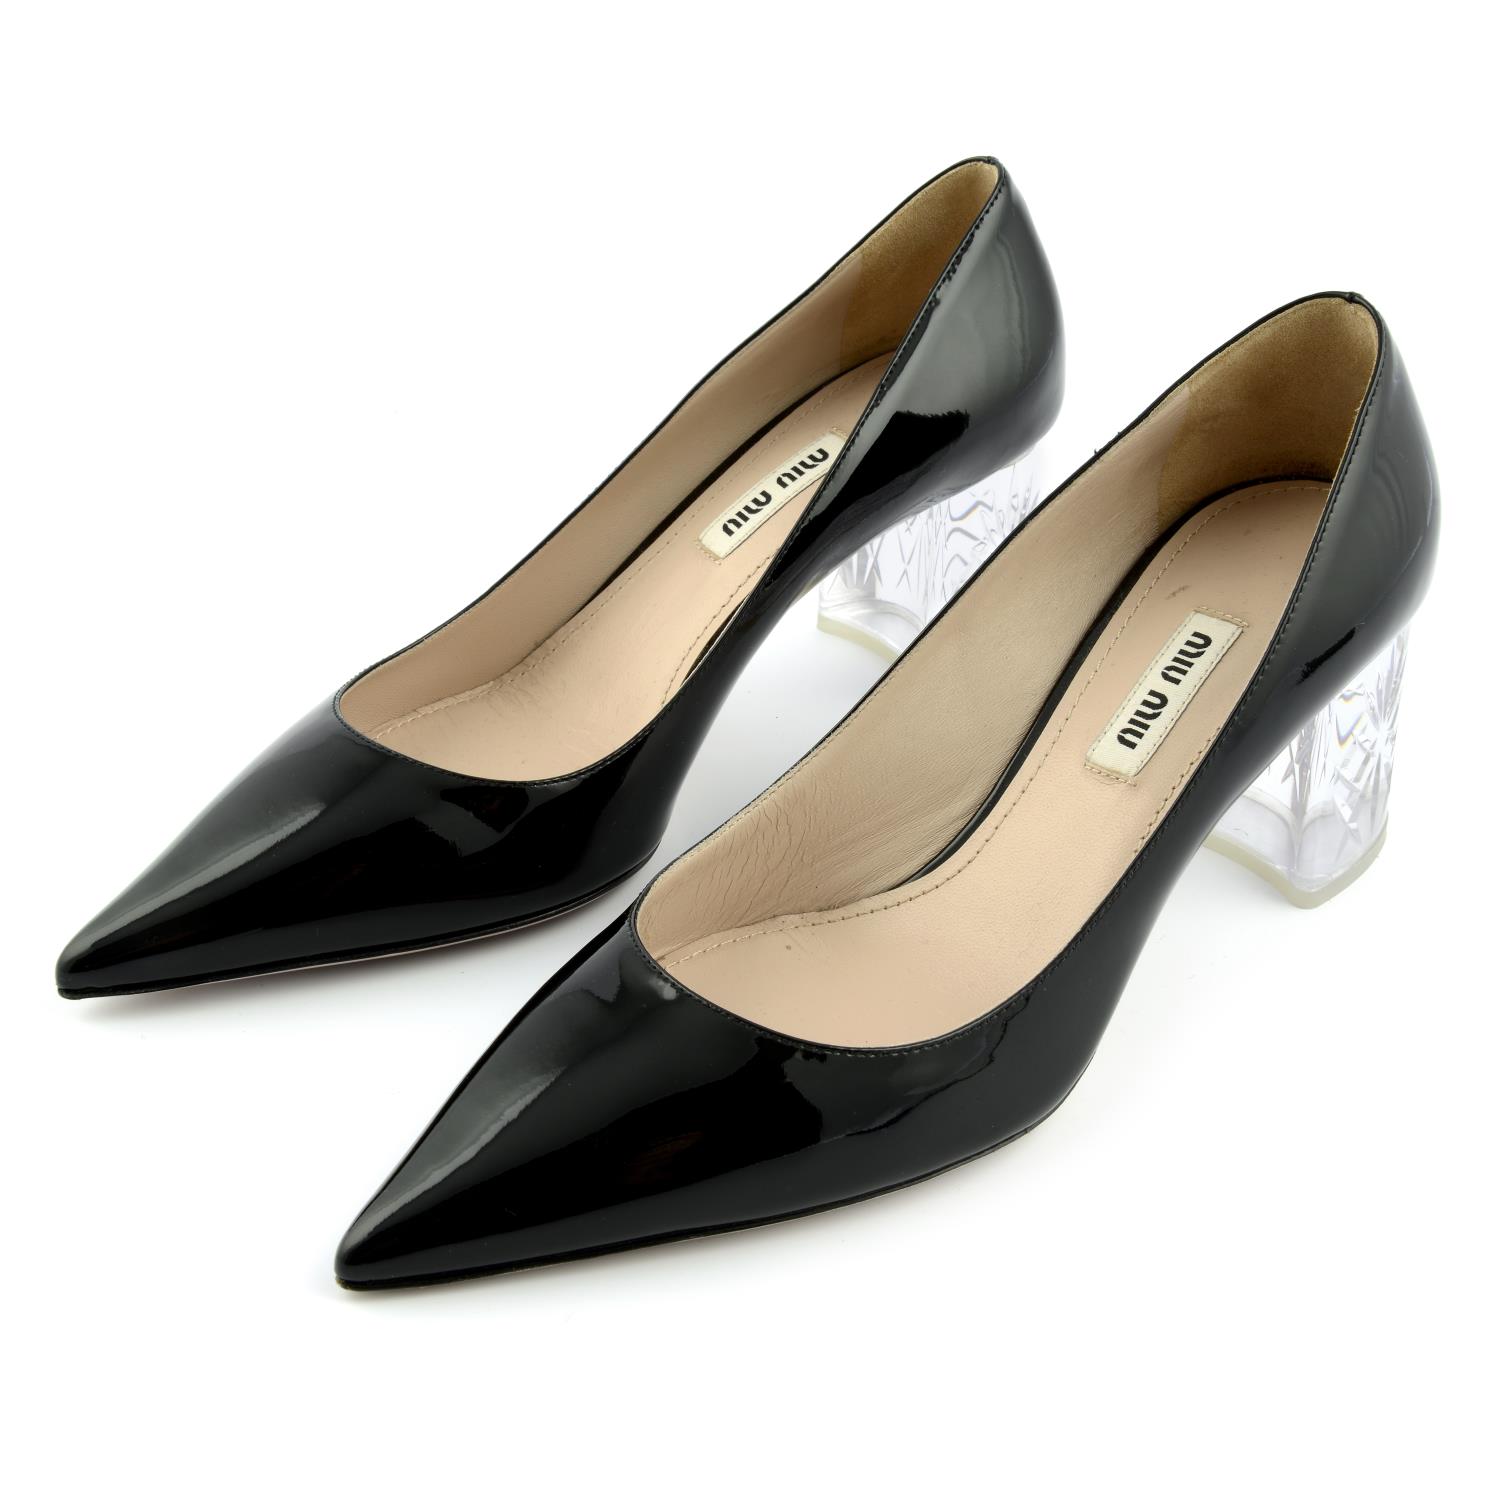 MIU MIU - a pair of black patent leather heeled pumps. - Image 2 of 5